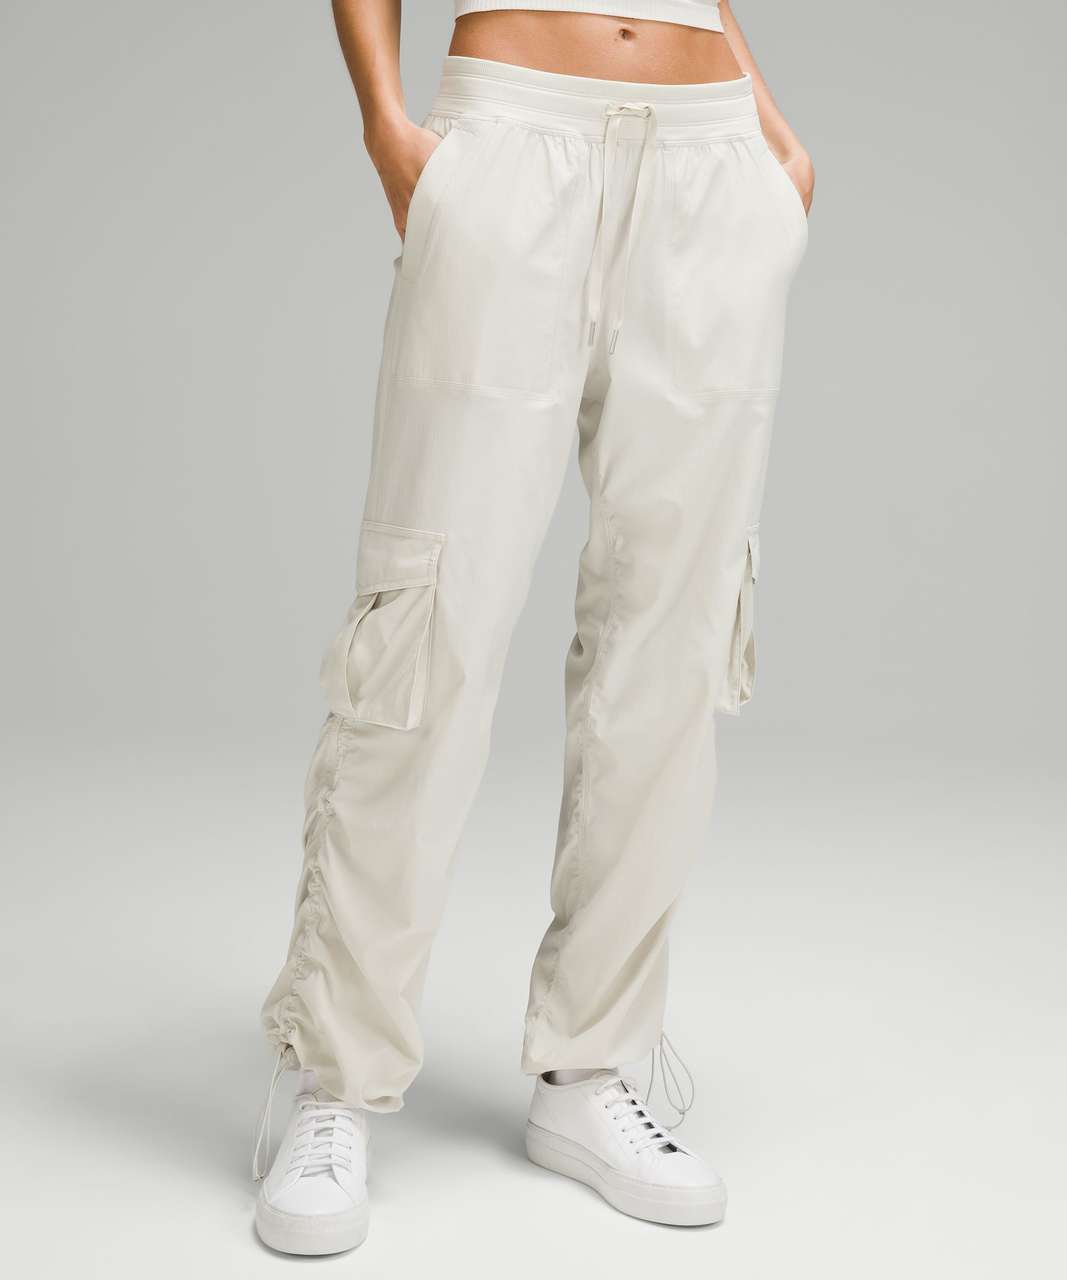 the lululemon dance studio pants are a 10/10 #tryonhaul #lululemonhaul